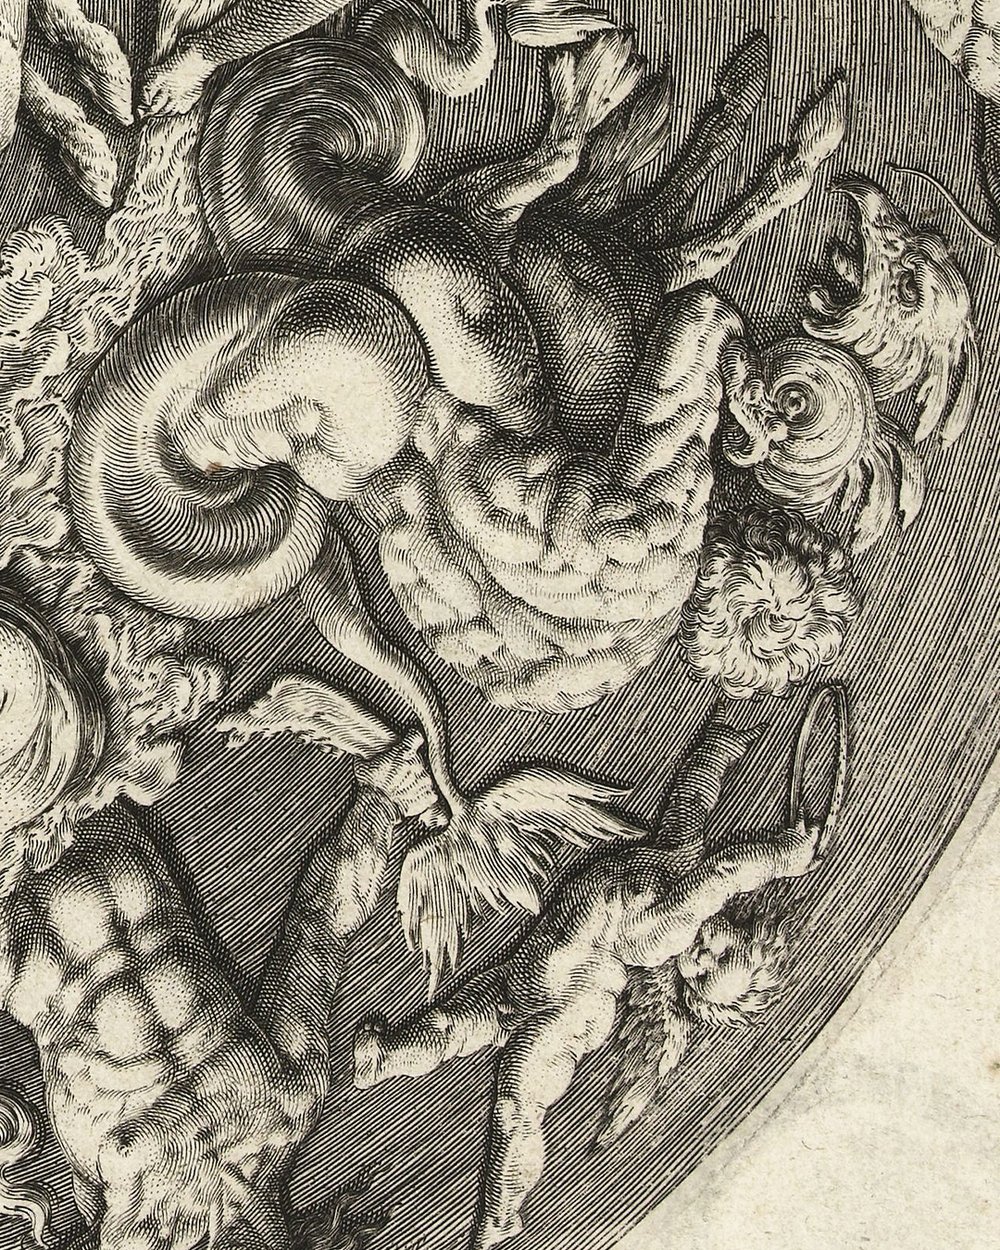 ''The Kingdom of Neptune'' (1587)